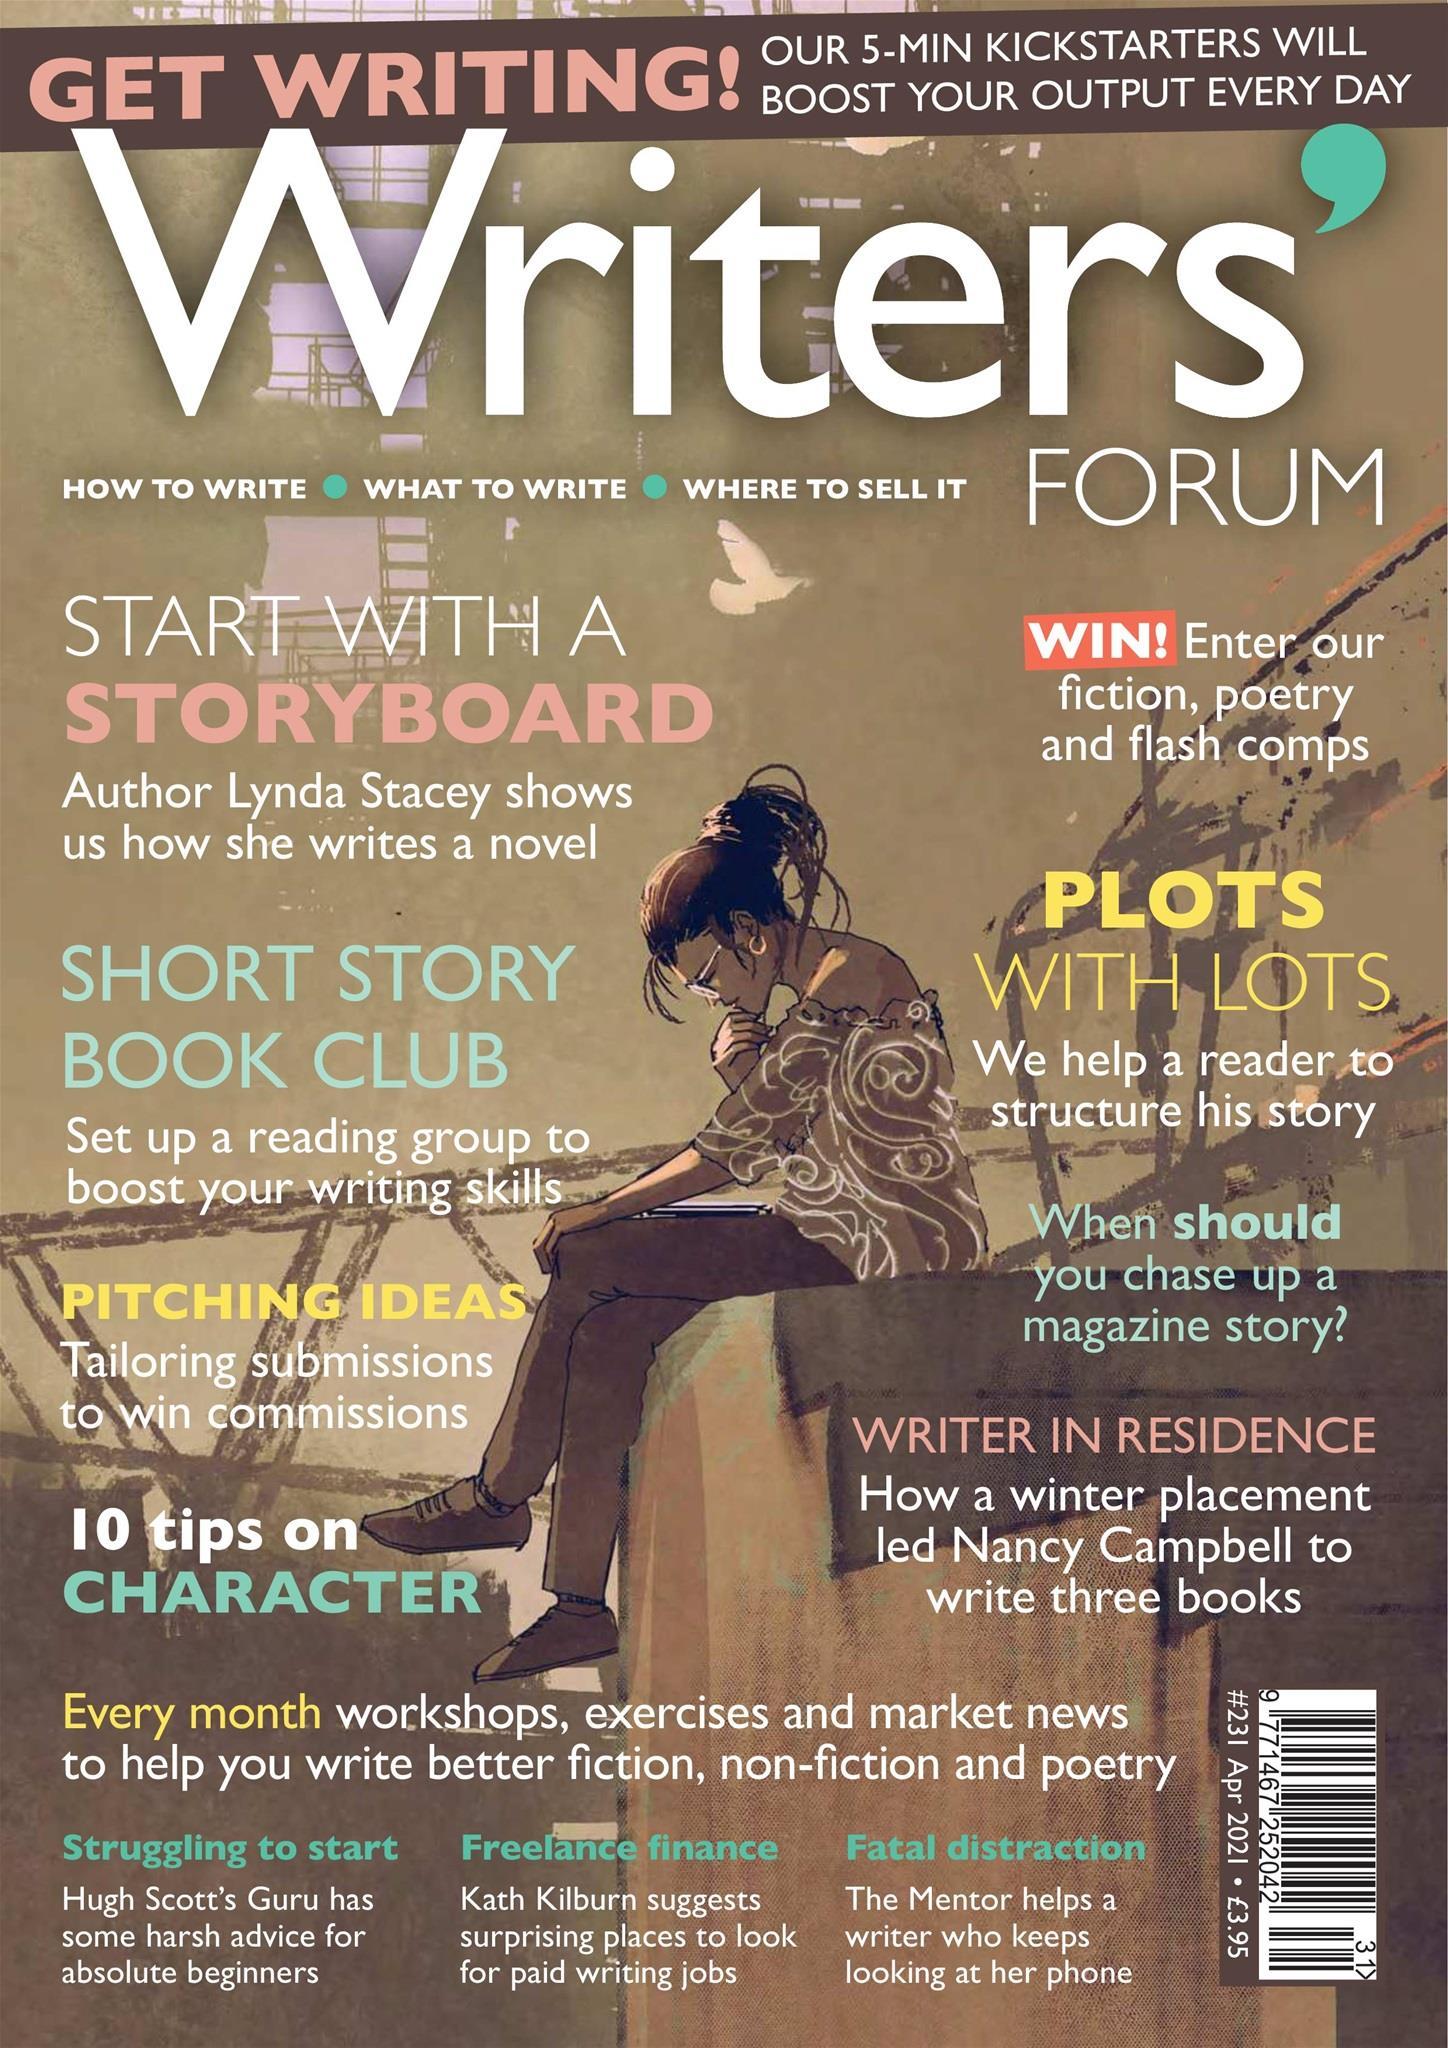 Writ forum. Forum entry how to write.